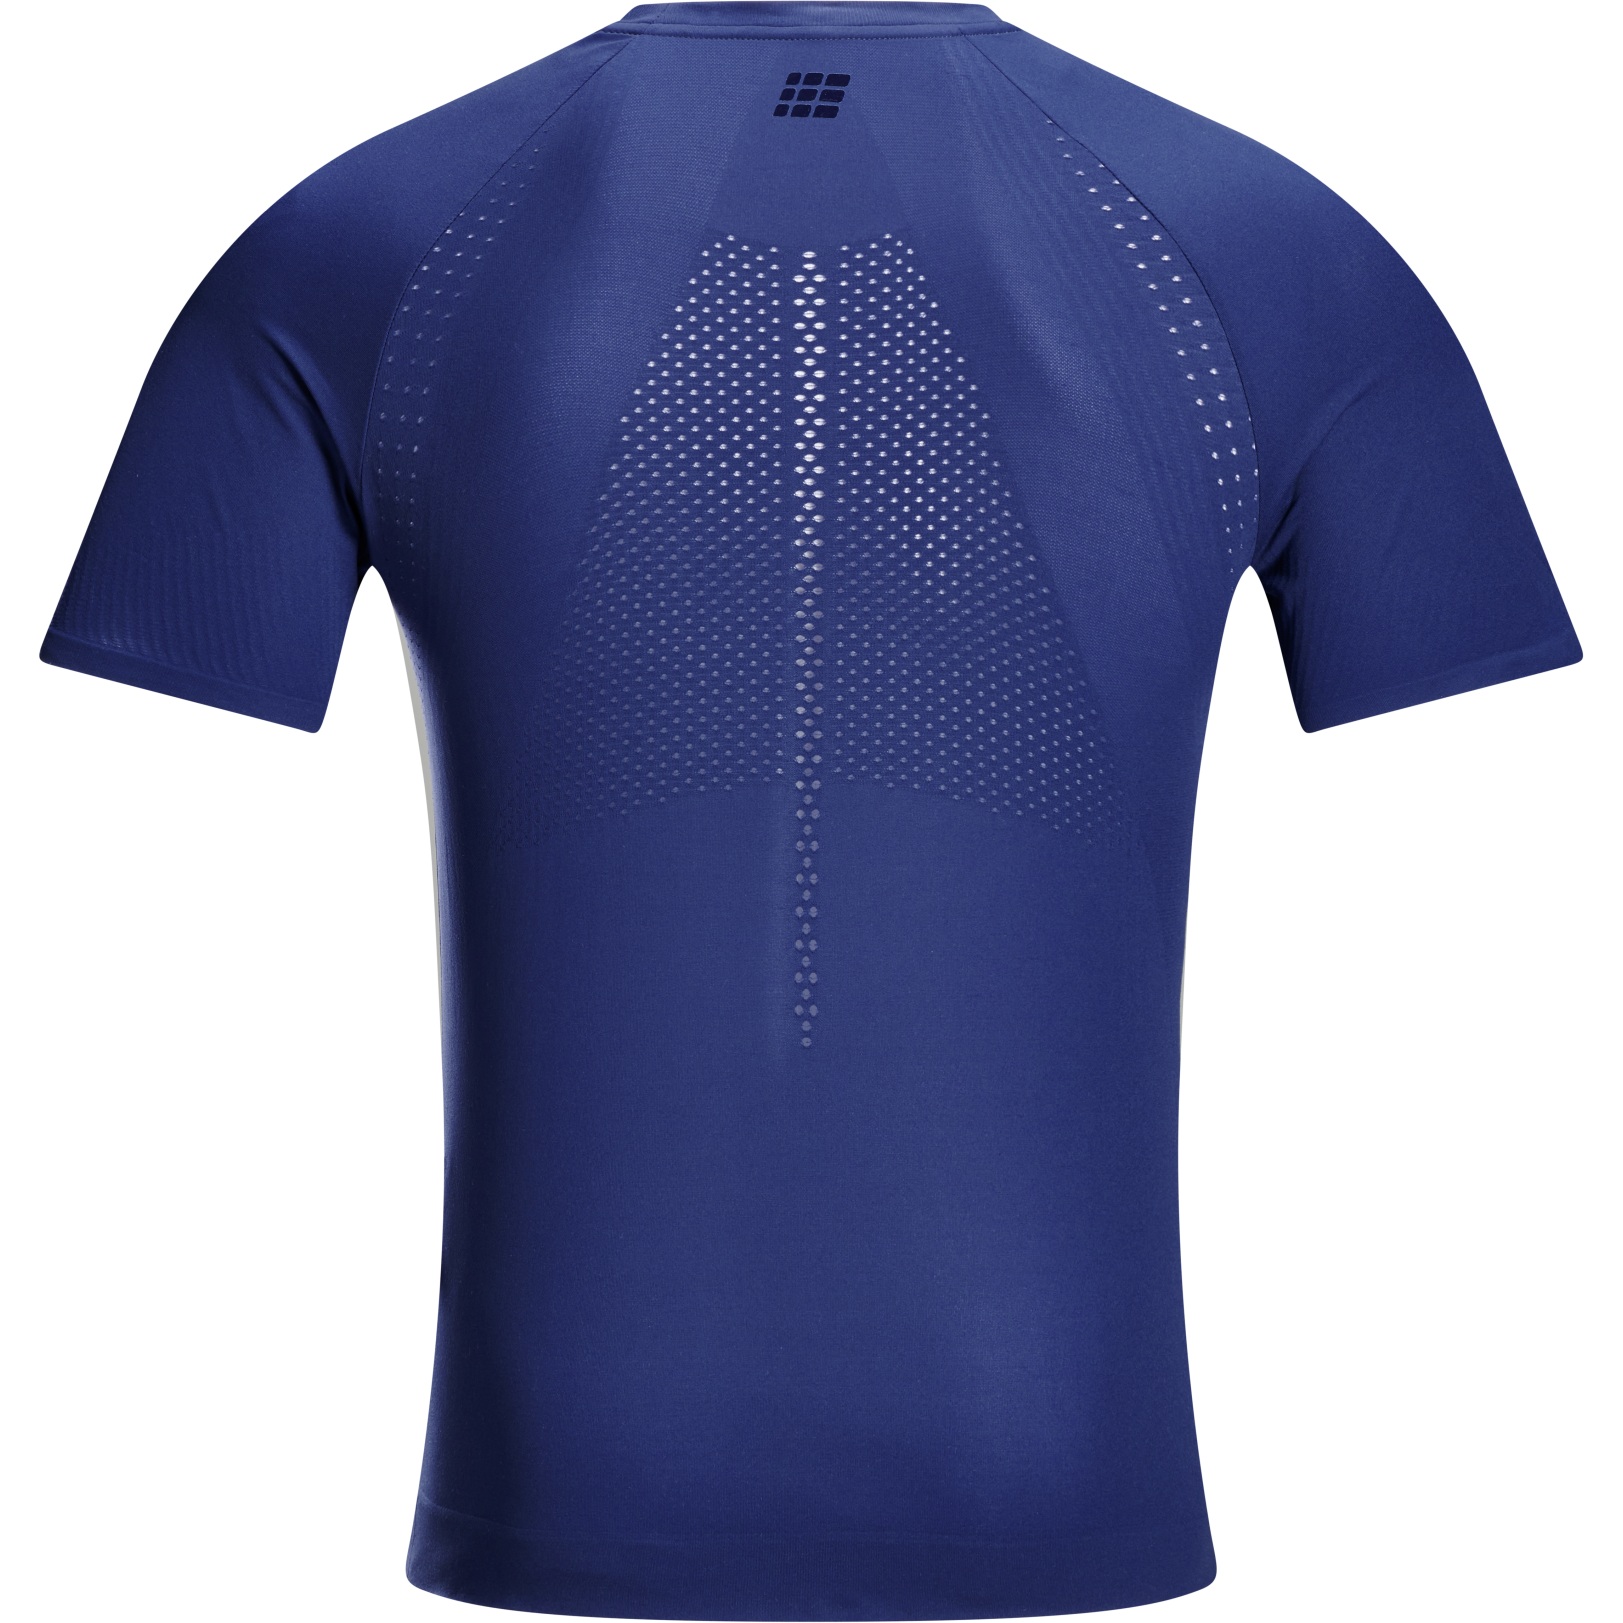 https://images.bike24.com/i/mb/c1/0a/f8/cep-ultralight-seamless-t-shirt-v2-men-dark-blue-2-1602313.jpg